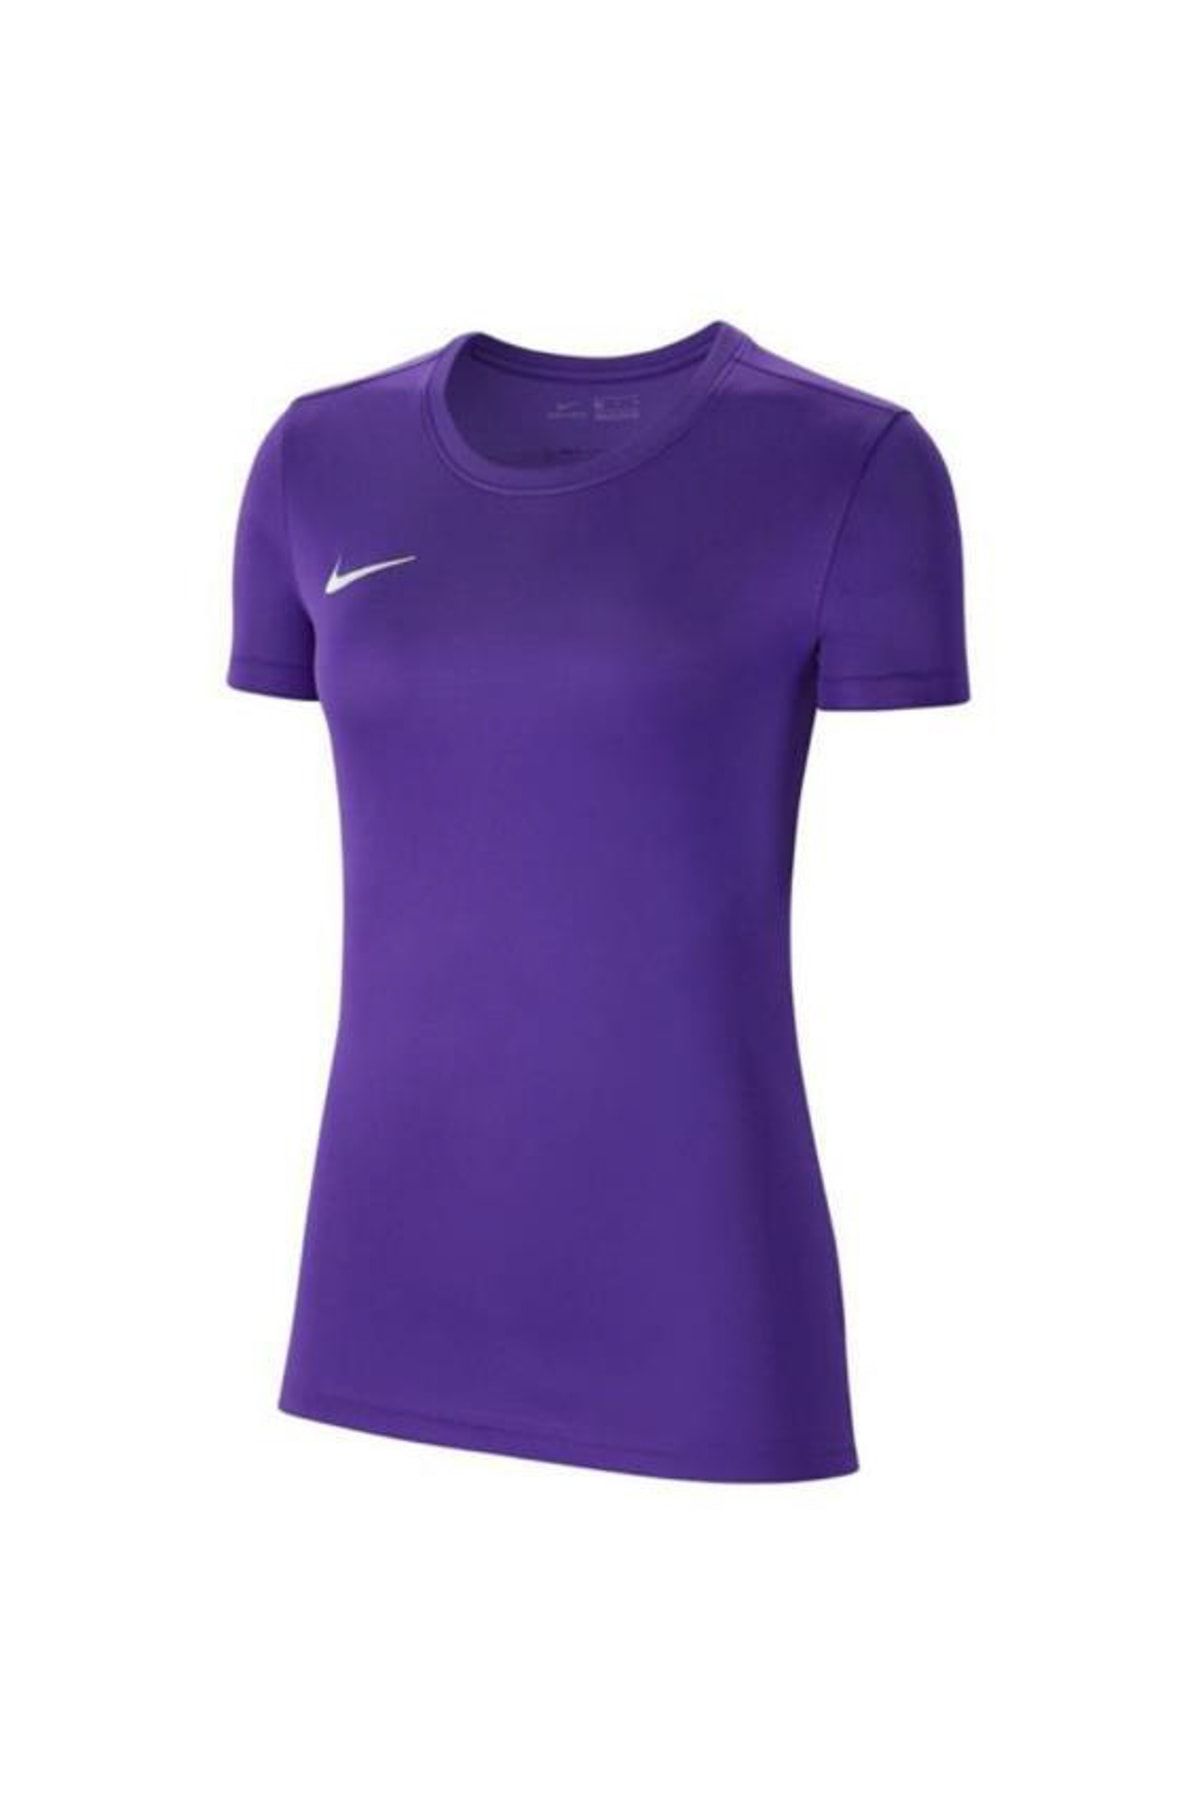 تیشرت ورزشی زنانه نایک بنفش Nike